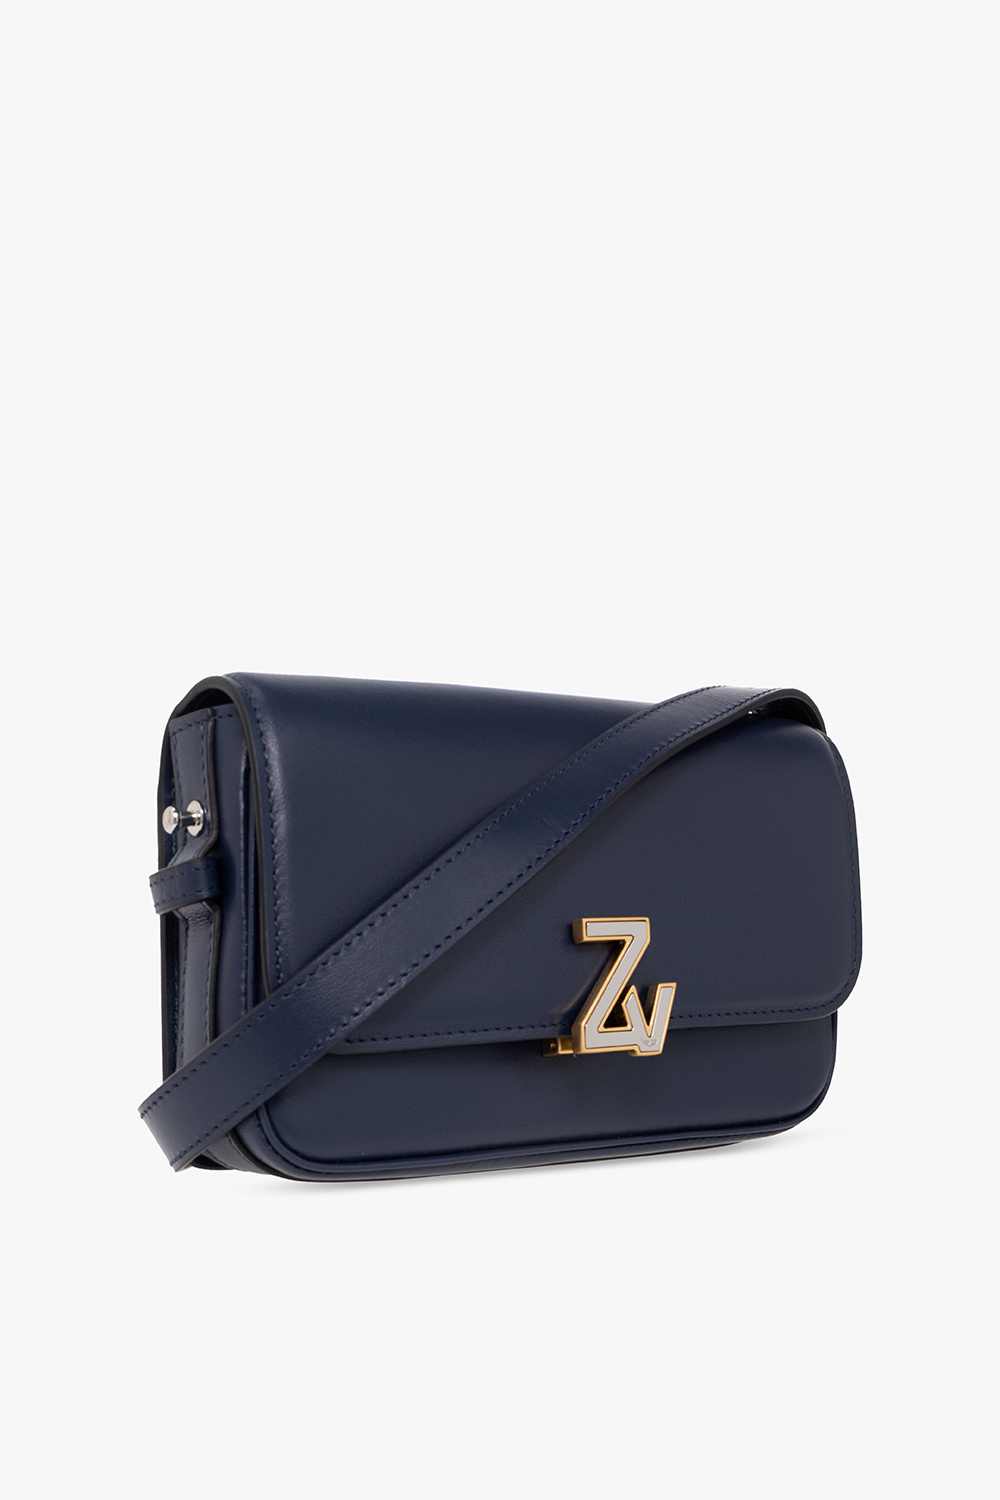 Zadig & Voltaire ‘ZV Initiale Mini’ shoulder Tory bag